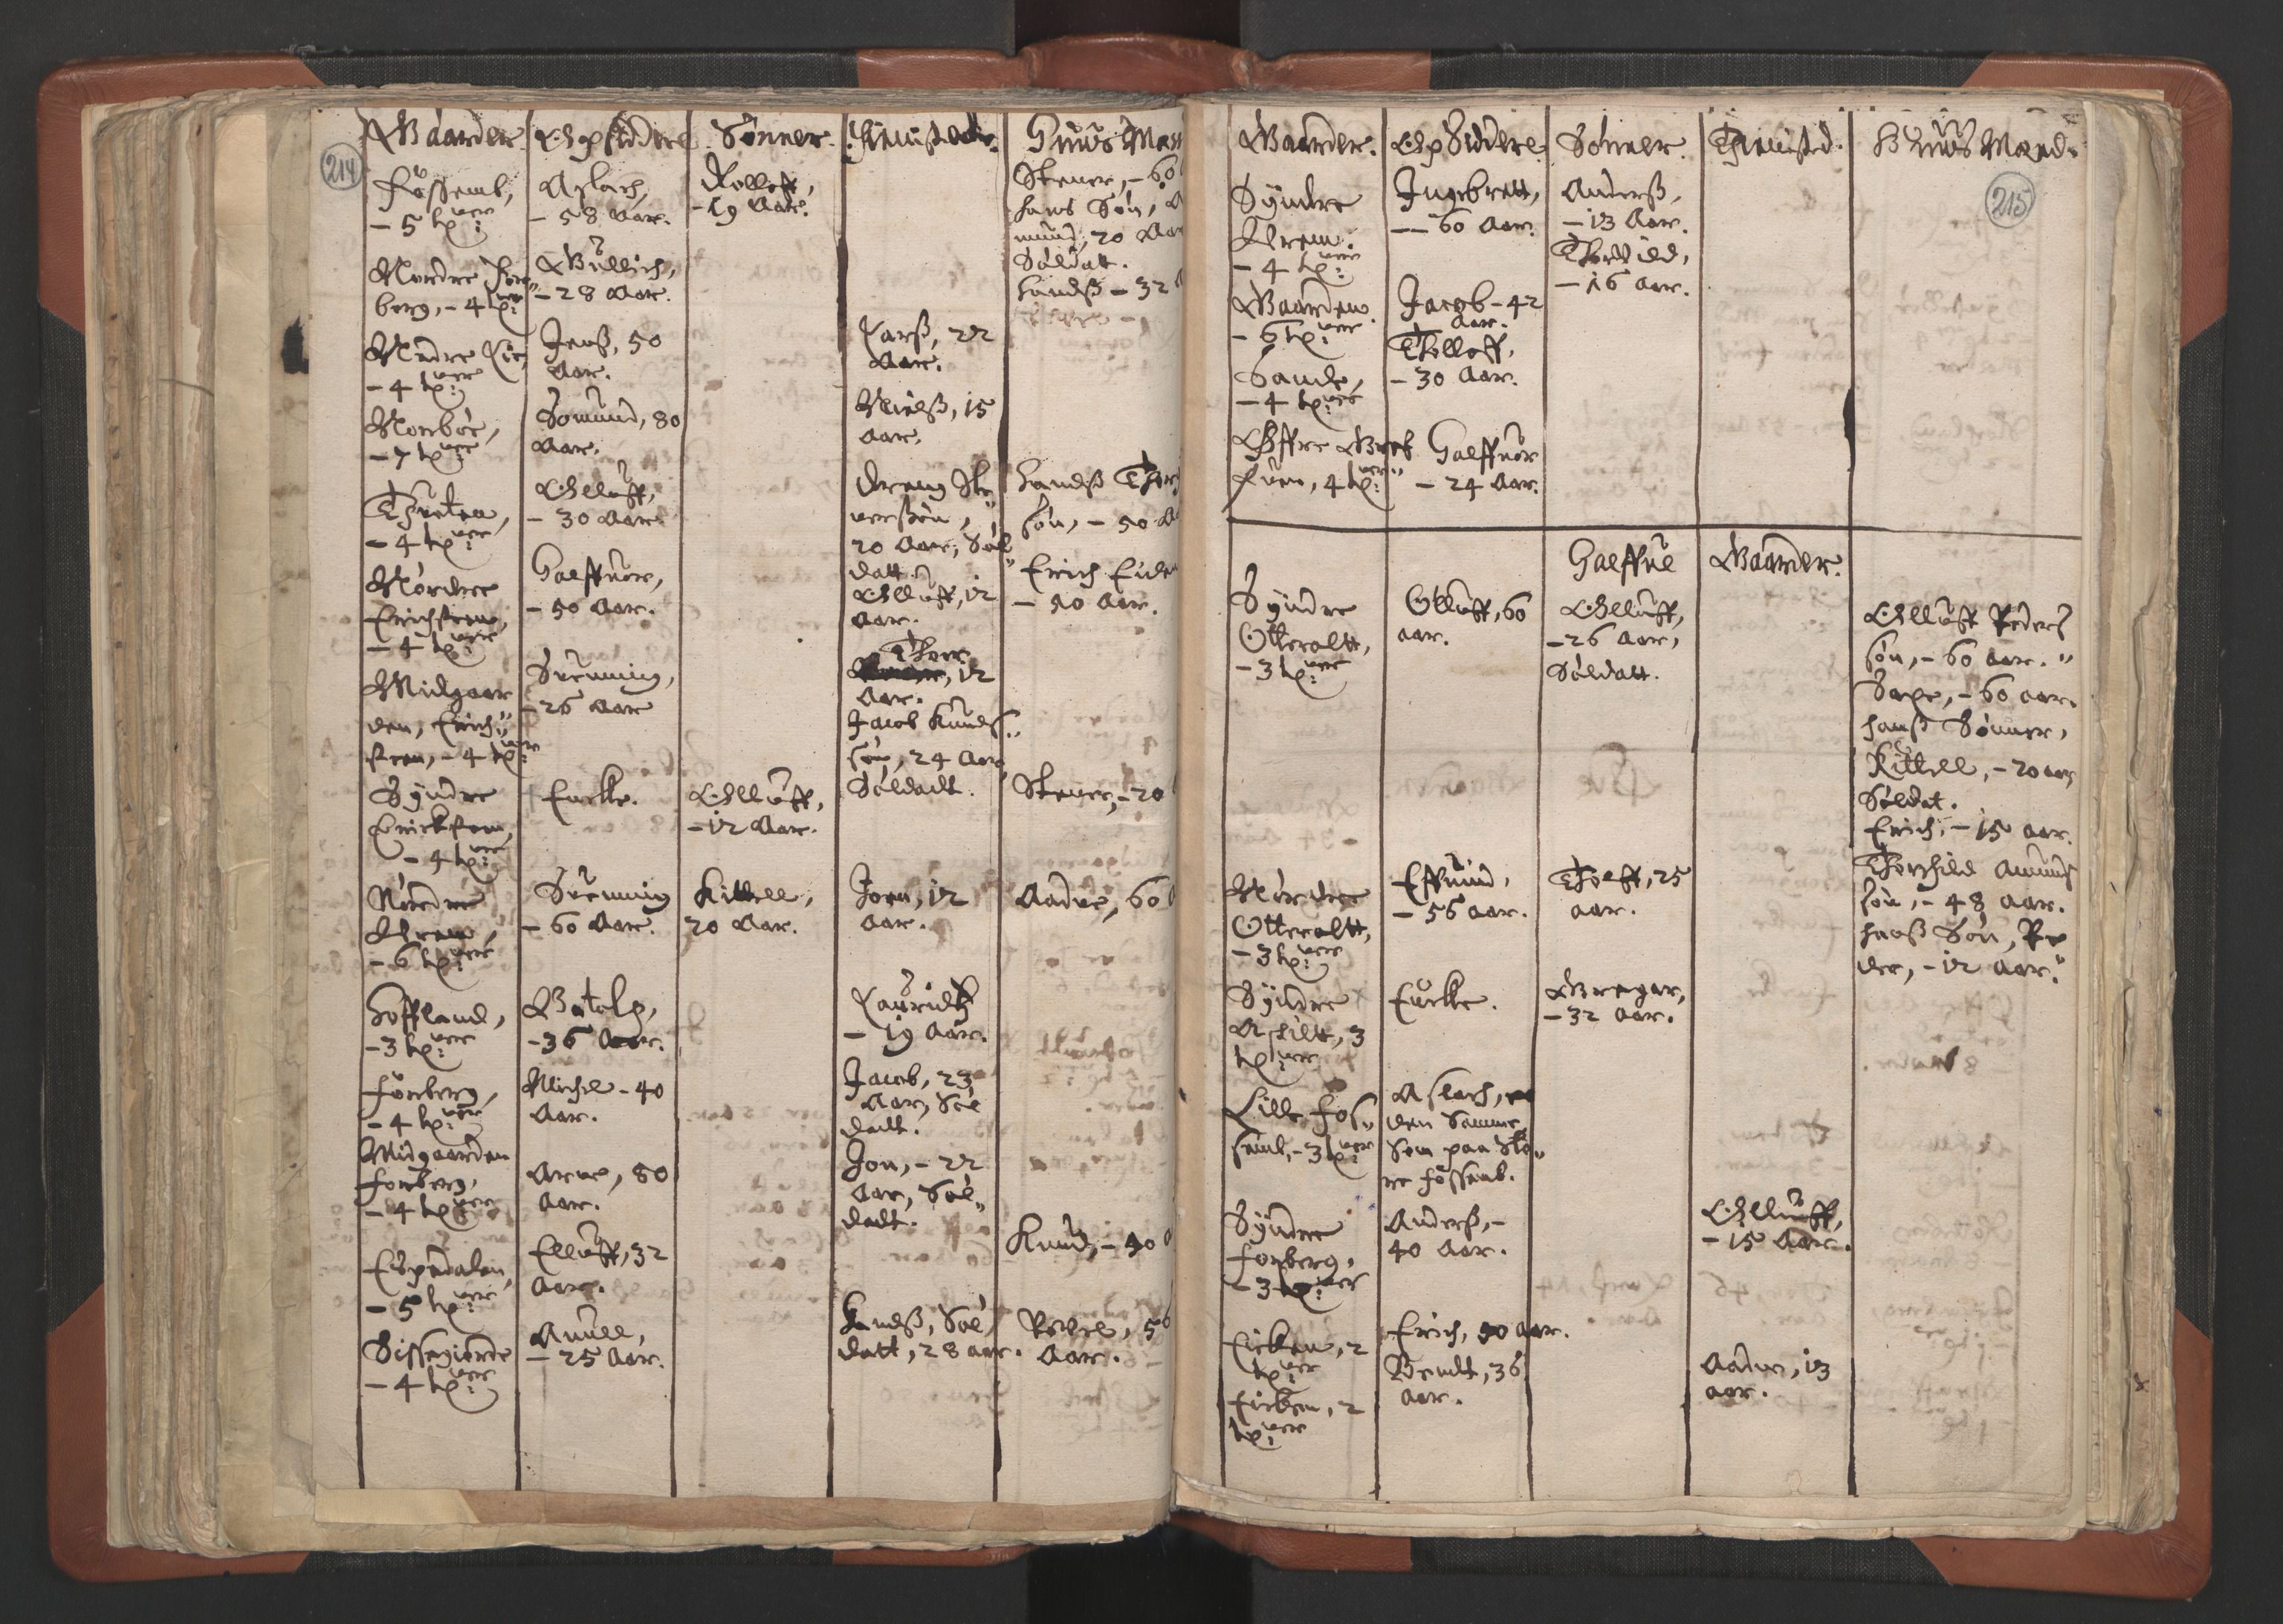 RA, Vicar's Census 1664-1666, no. 12: Øvre Telemark deanery, Nedre Telemark deanery and Bamble deanery, 1664-1666, p. 214-215